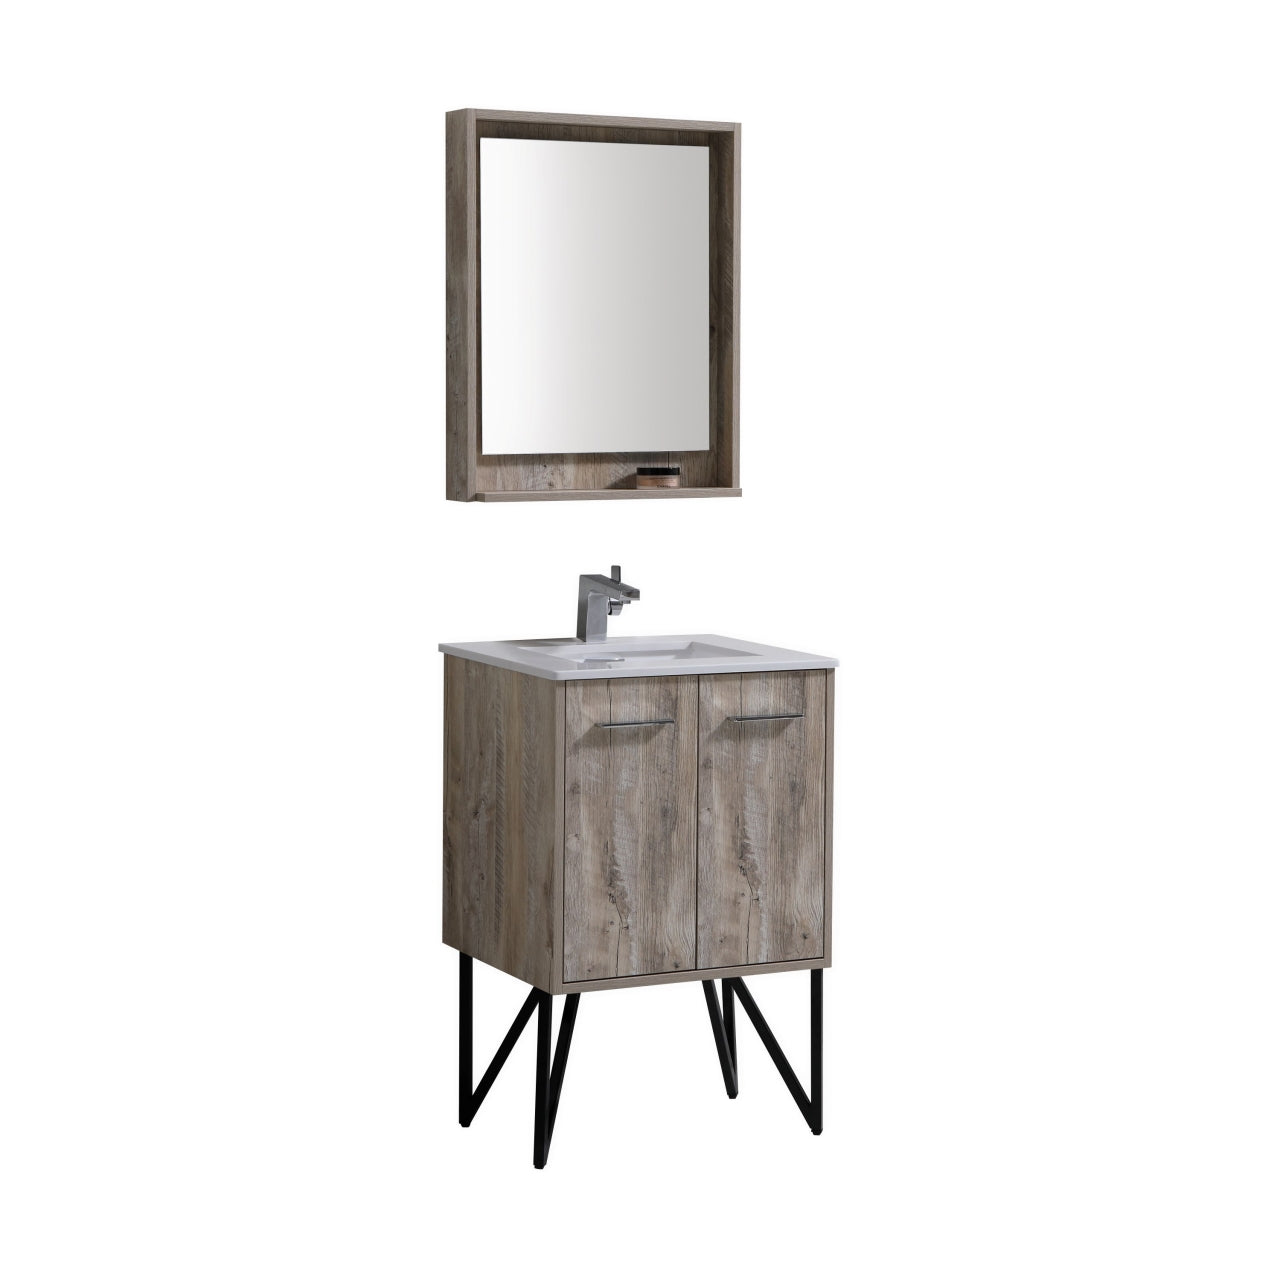 KUBEBATH Bosco KB24NW 24" Single Bathroom Vanity in Nature Wood with Cream Quartz, Rectangle Sink, Angled View with Mirror